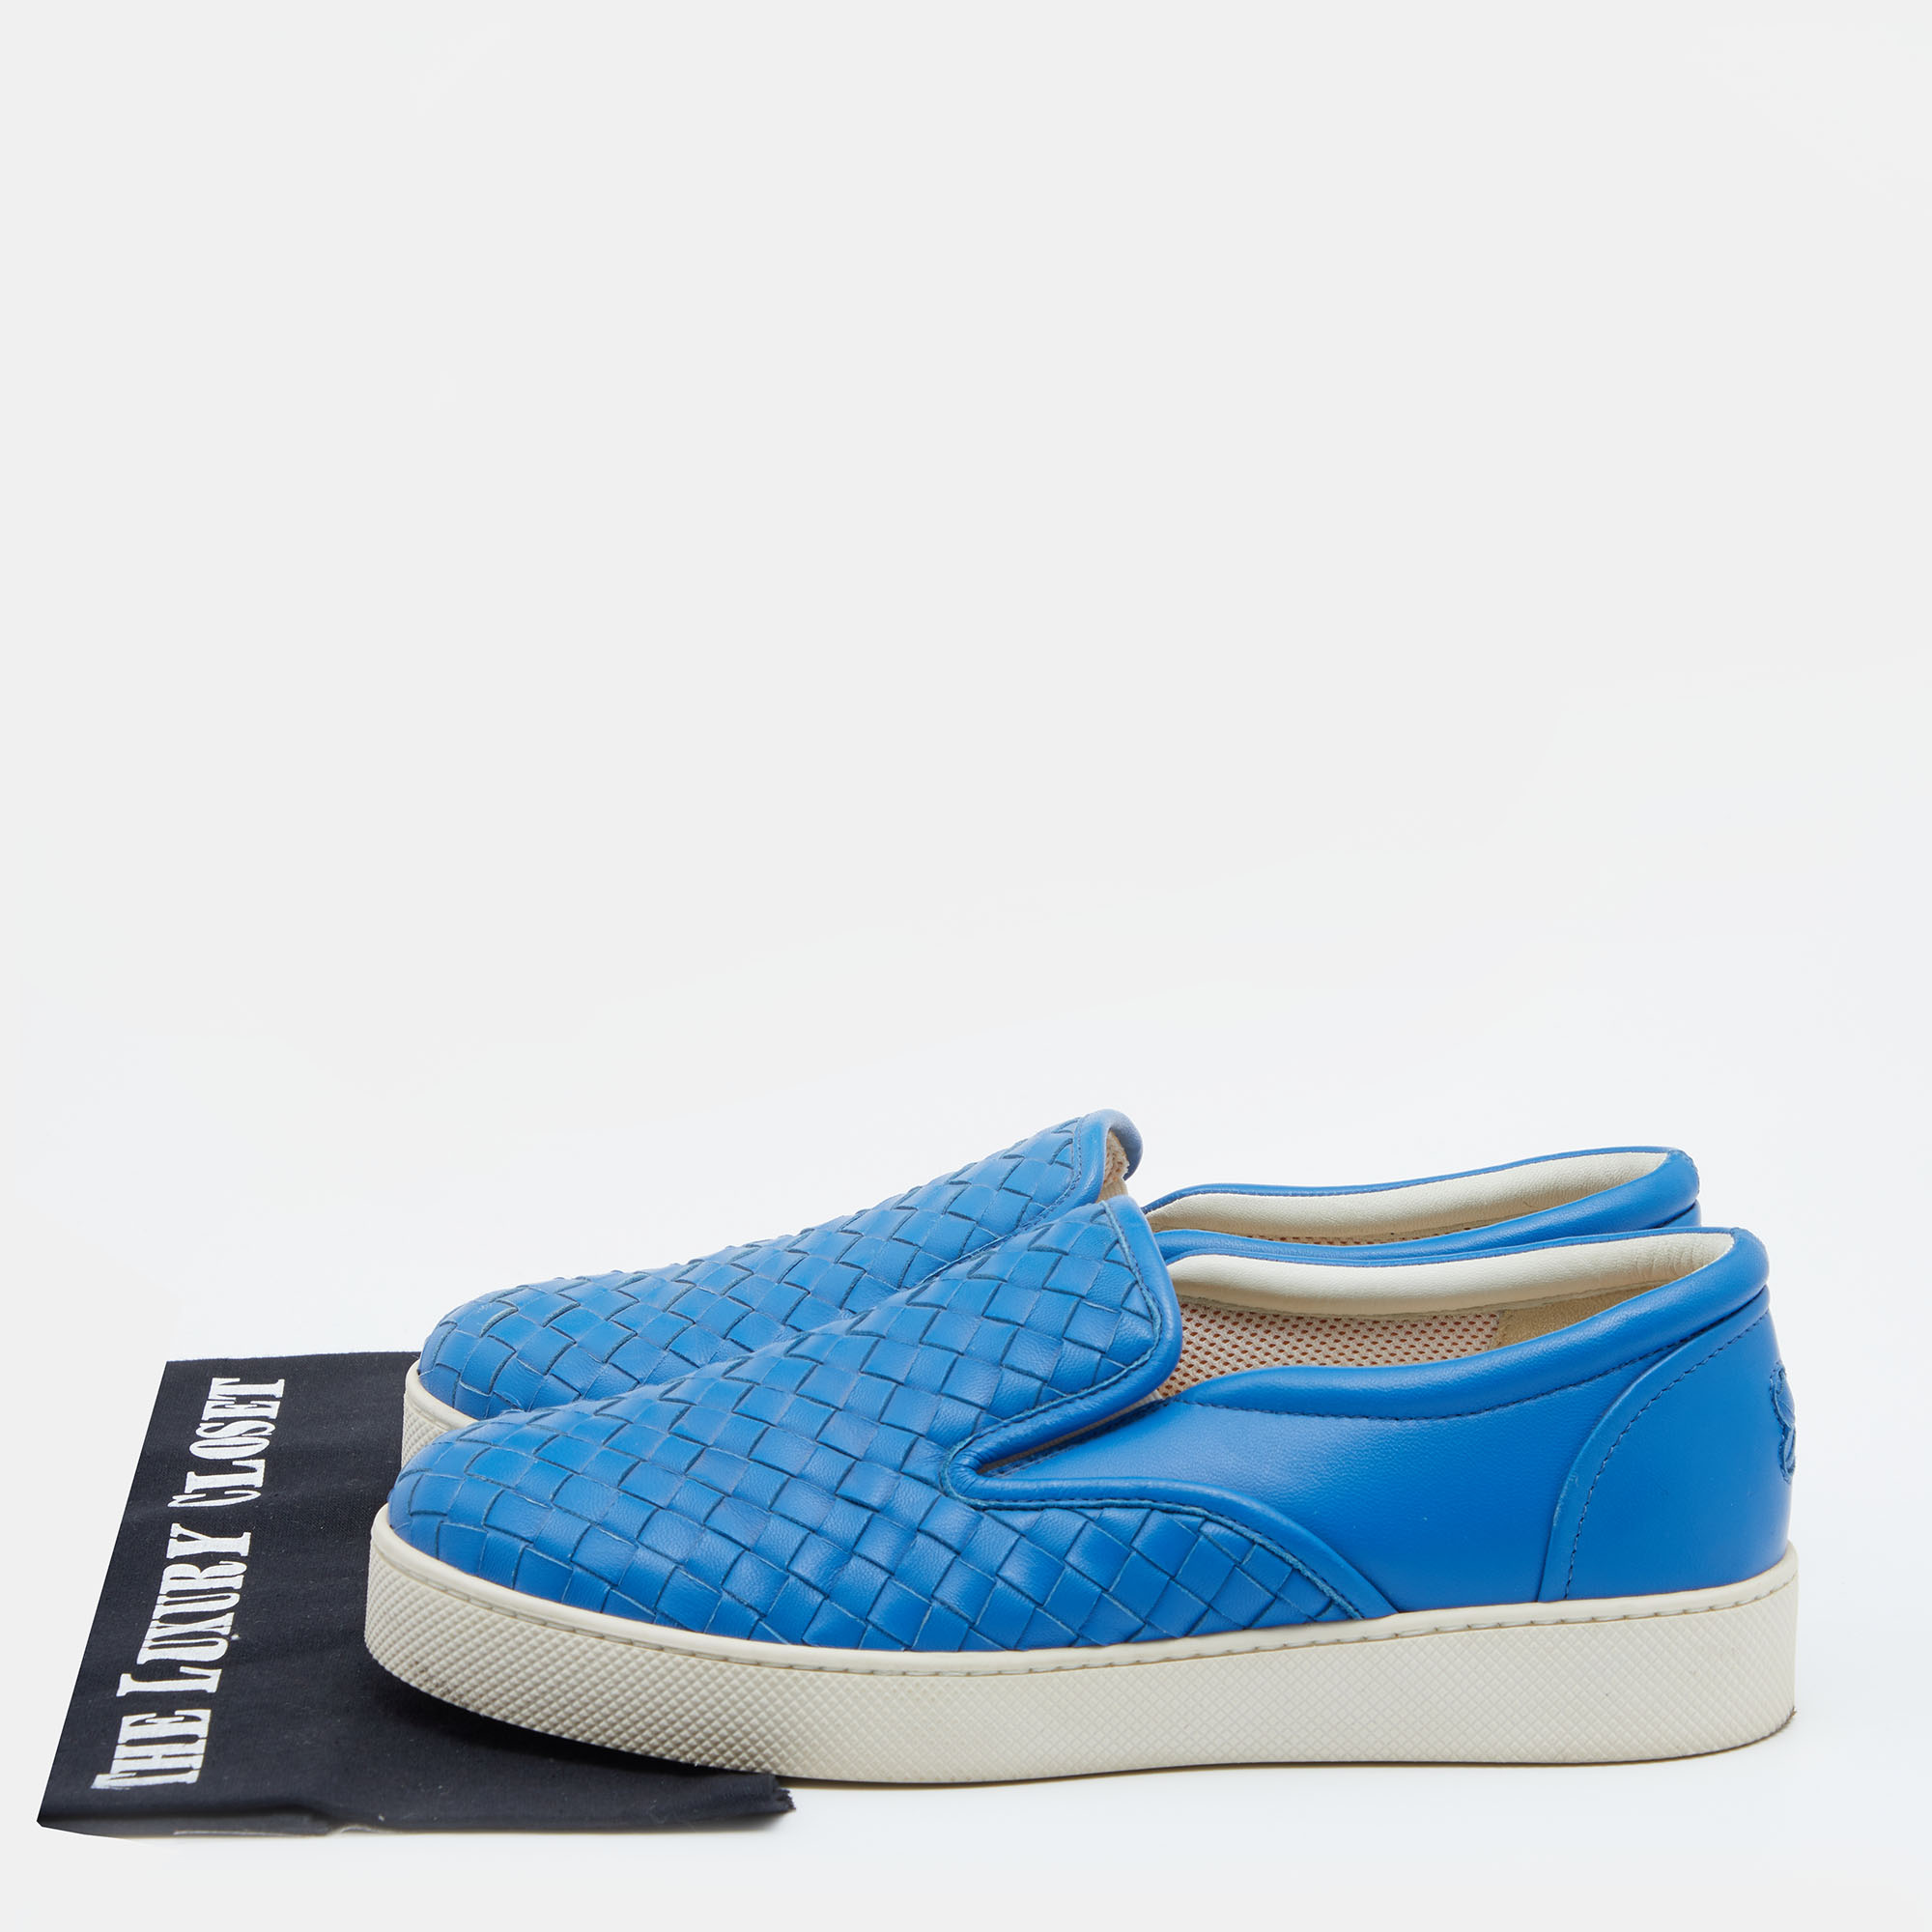 Bottega Veneta Blue Intrecciato Leather Slip On Sneakers Size 38.5